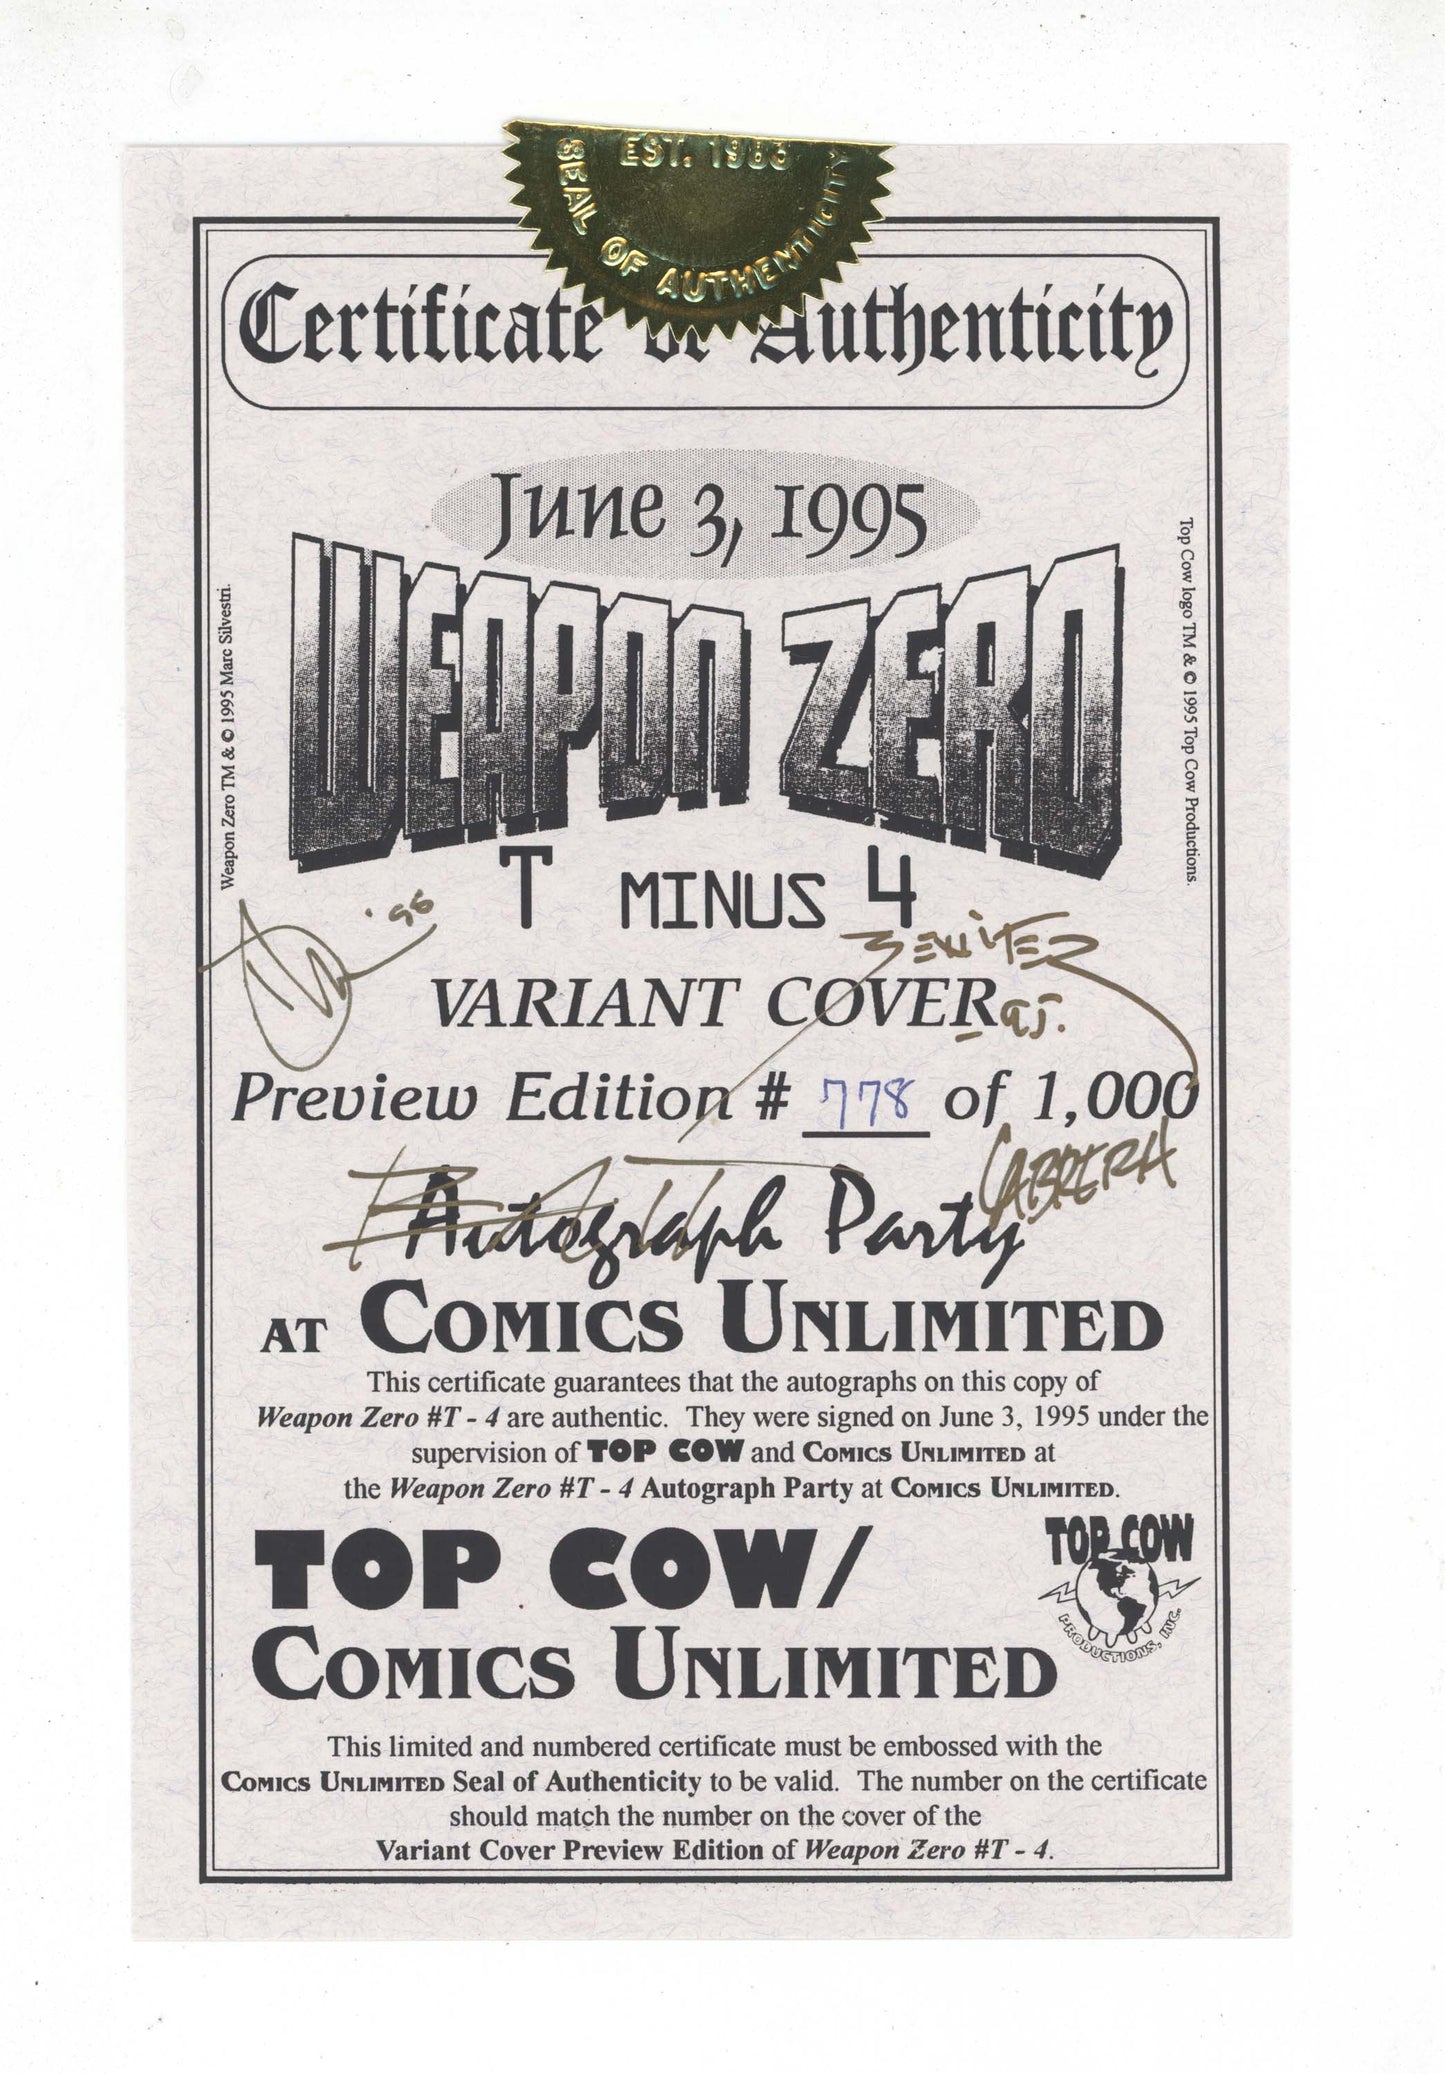 Batman Detective Comics 273 DC 1959 GD VG Sheldon Moldoff Robin Dragon Society